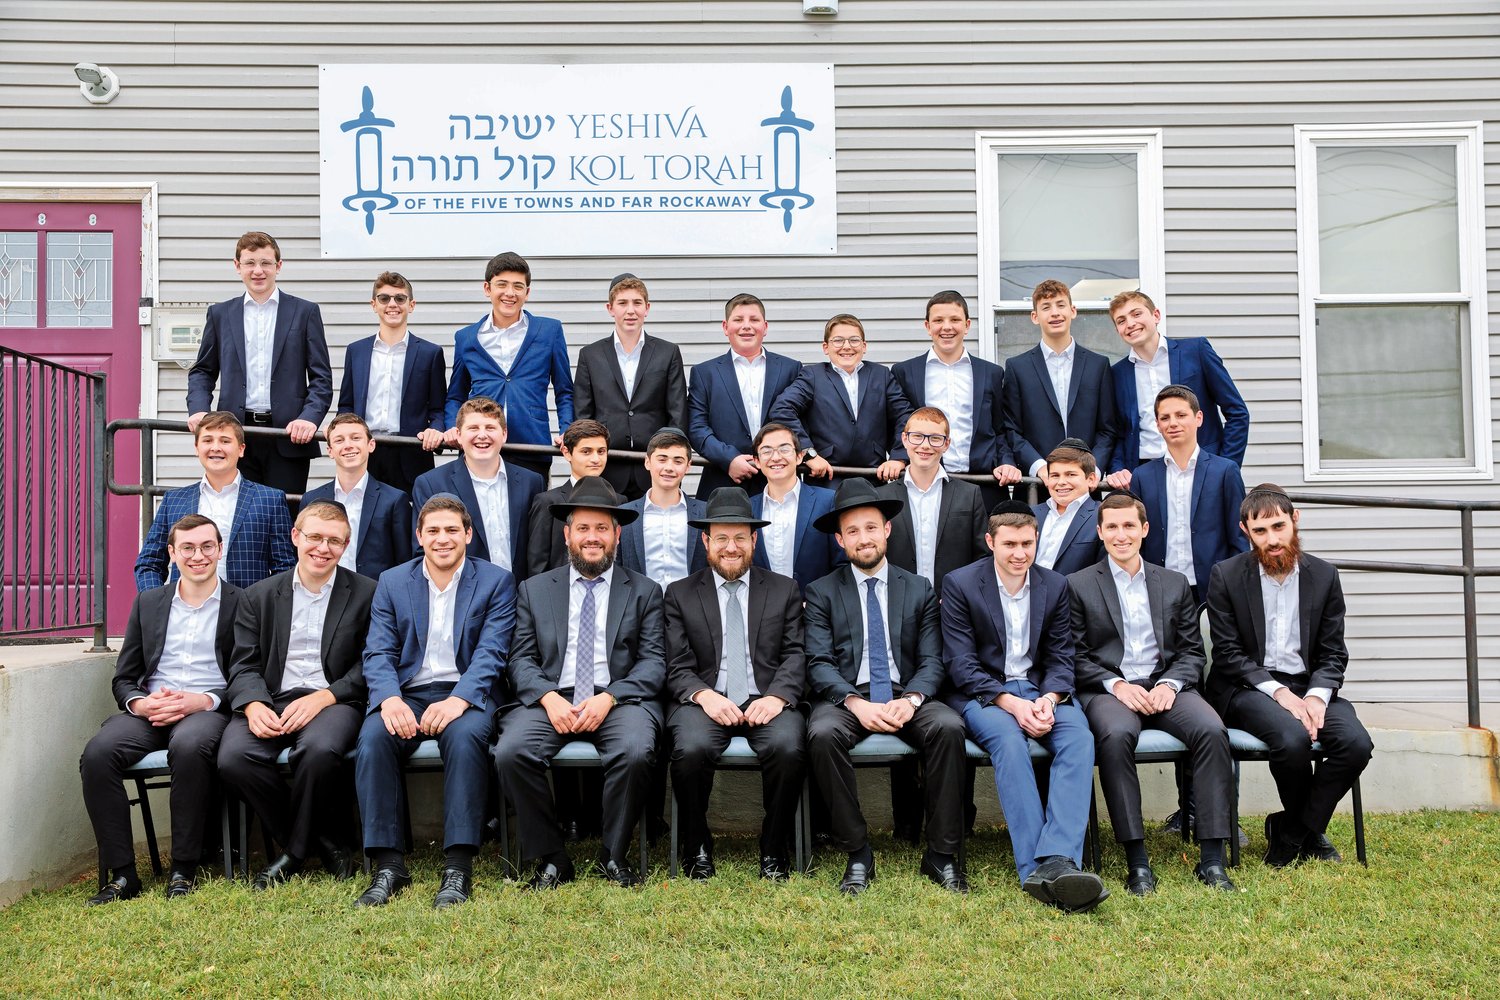 Yeshiva Kol Torah’s first class. In the front row middle were Rabbi Dovid Opoczynski, Rabbi Boruch Wasser and Rabbi Yaakov Stern.